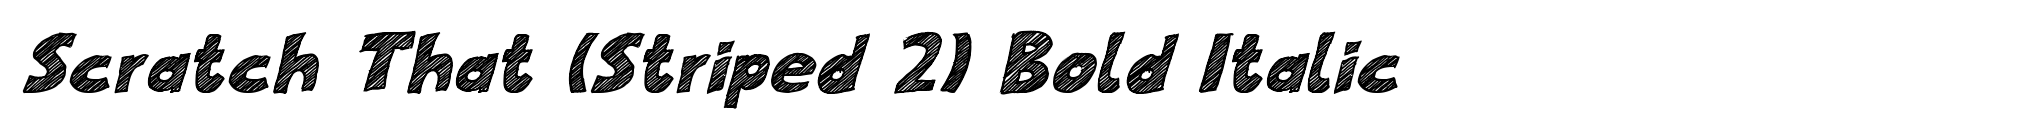 Scratch That (Striped 2) Bold Italic image